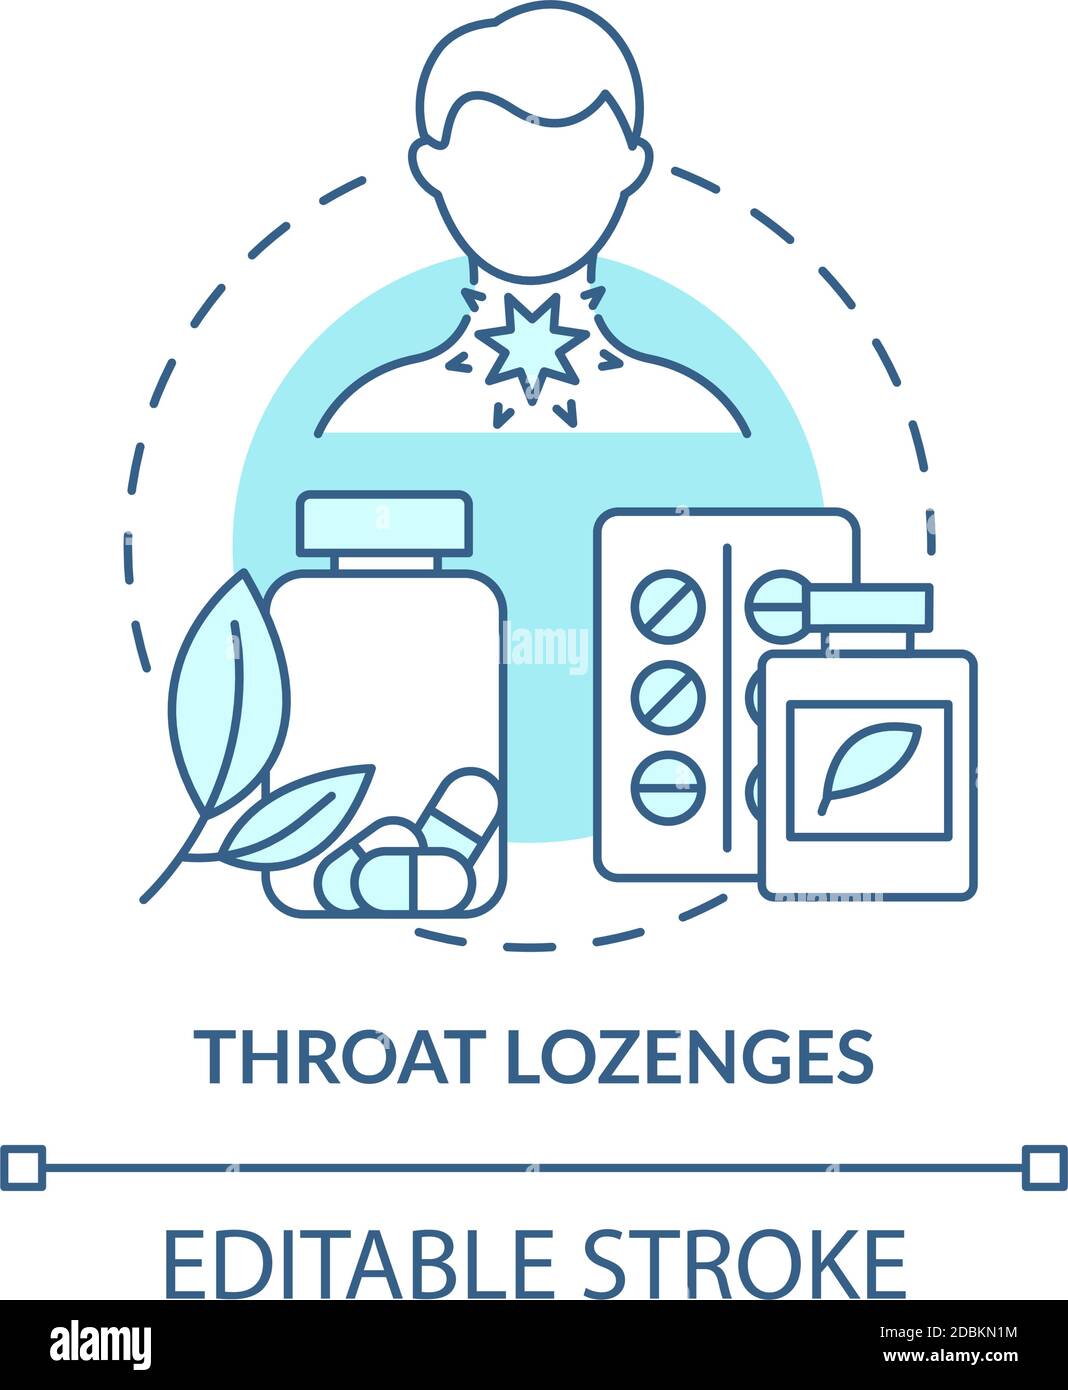 Throat lozenges concept icon Stock Vector